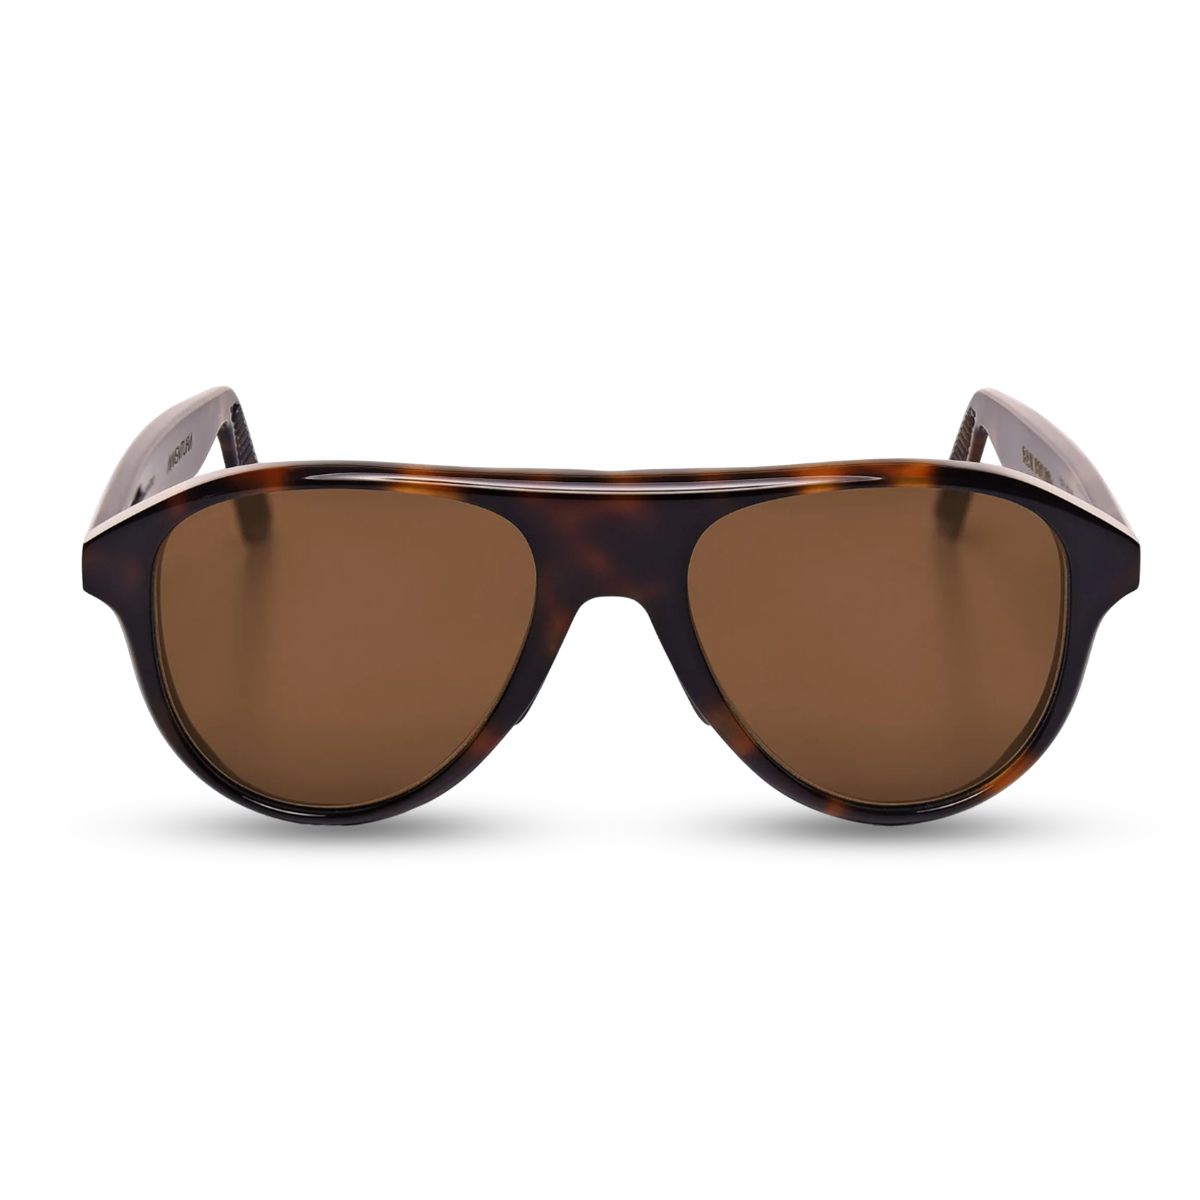 San Boldo Sunglasses - Dark Tortoise